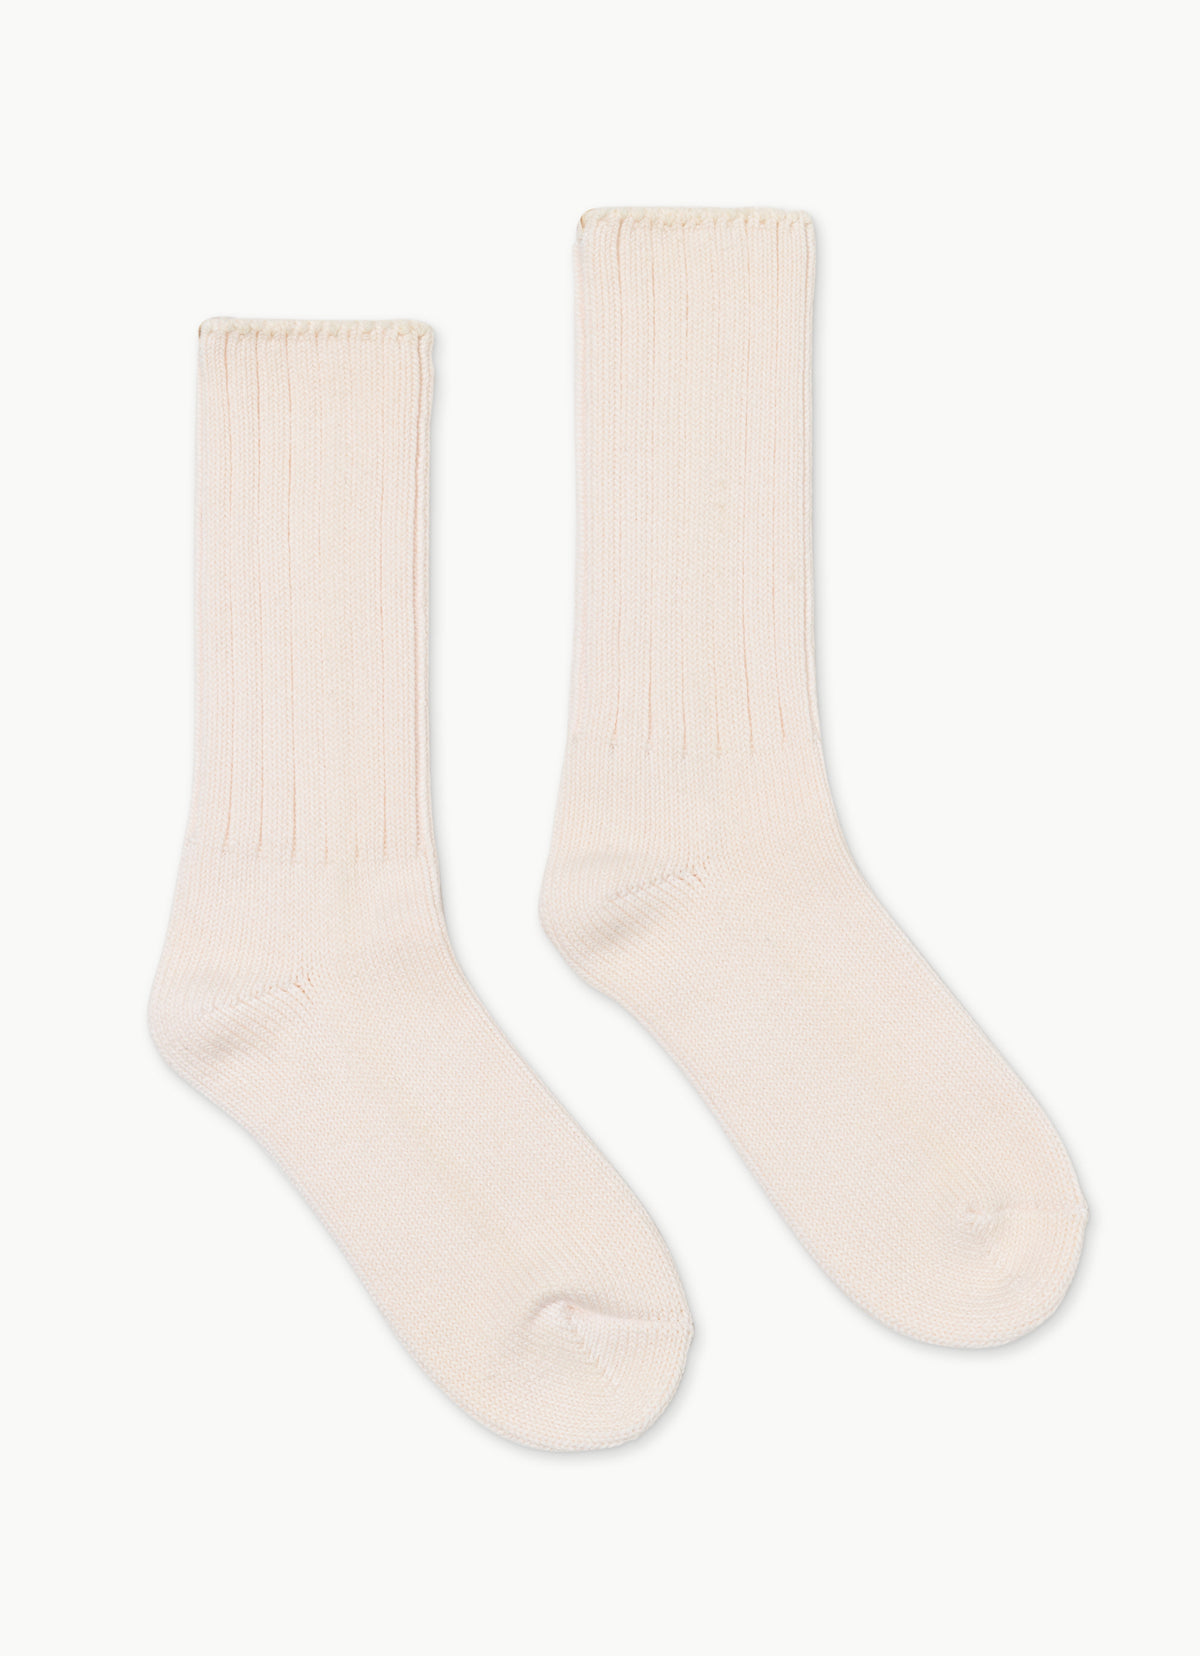 Bulky Rib ankle socks_dyed_Ivory